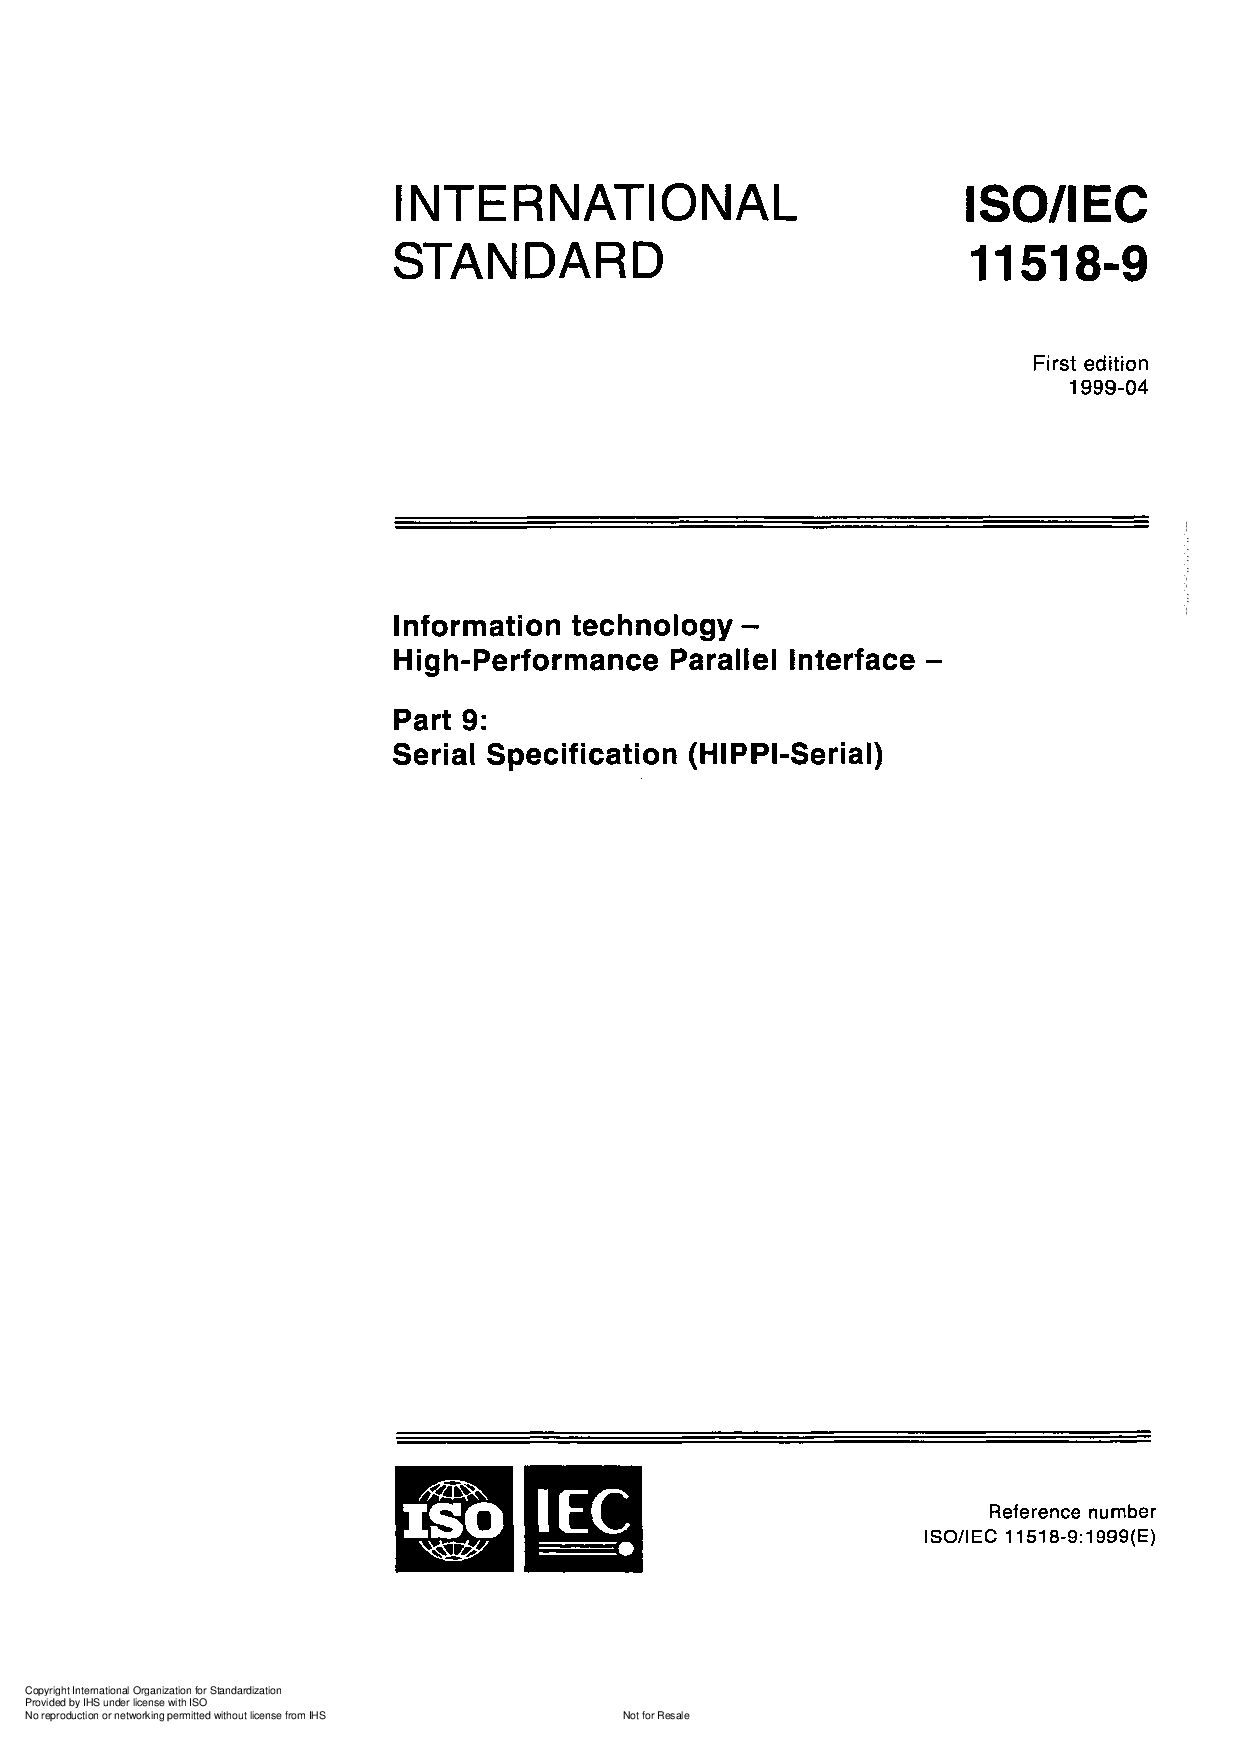 ISO/IEC 11518-9:1999